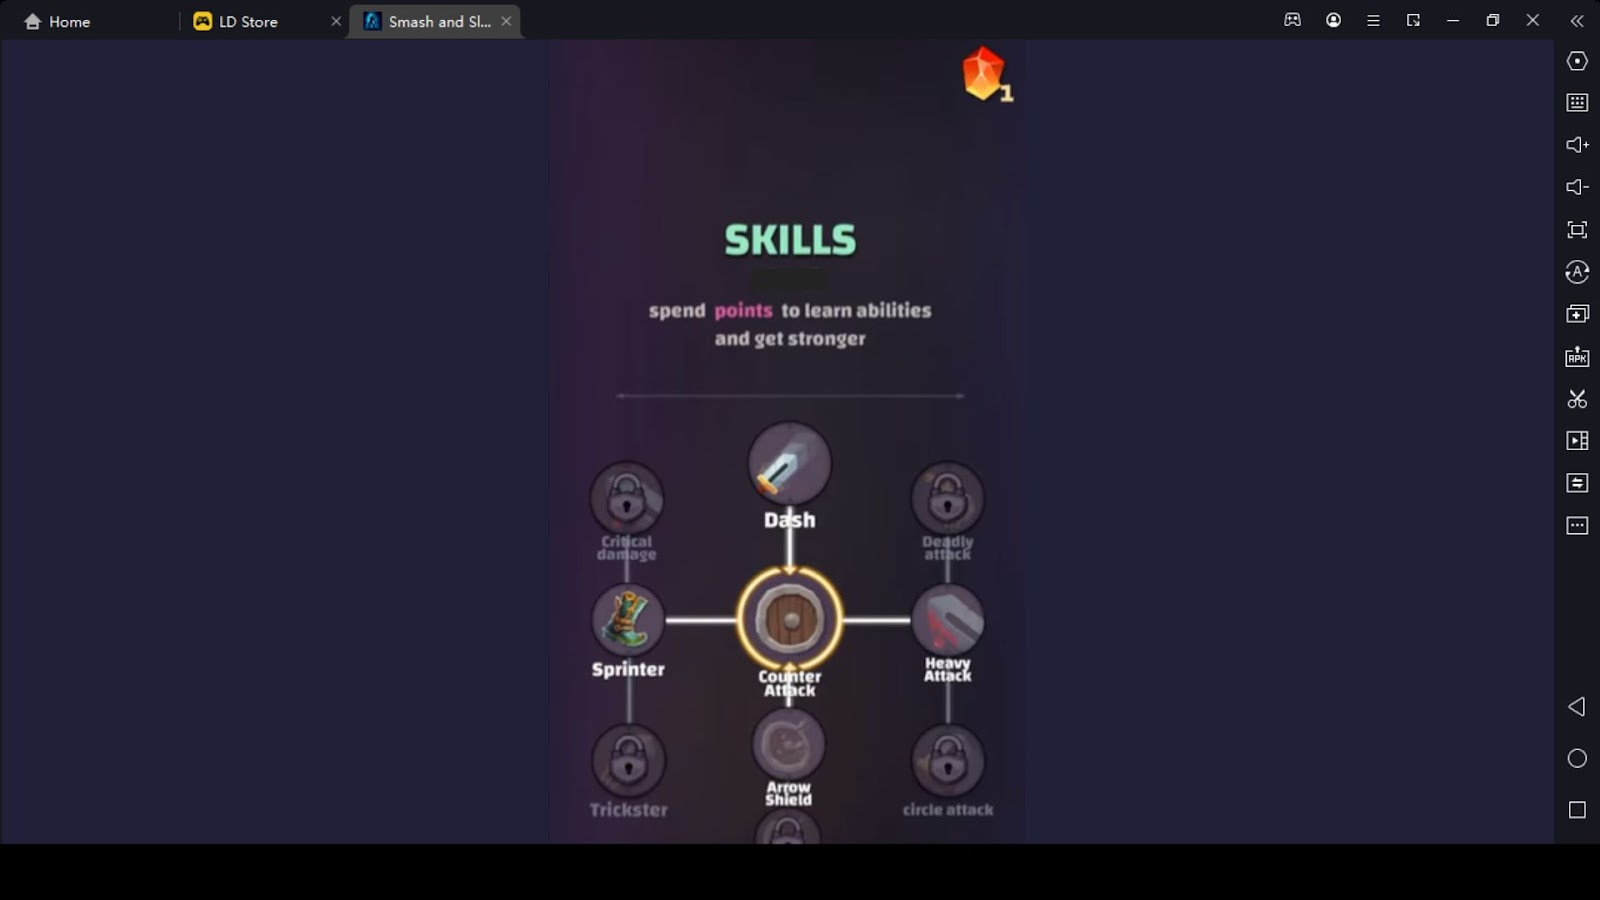 Skill Upgrades in Smash and Slash